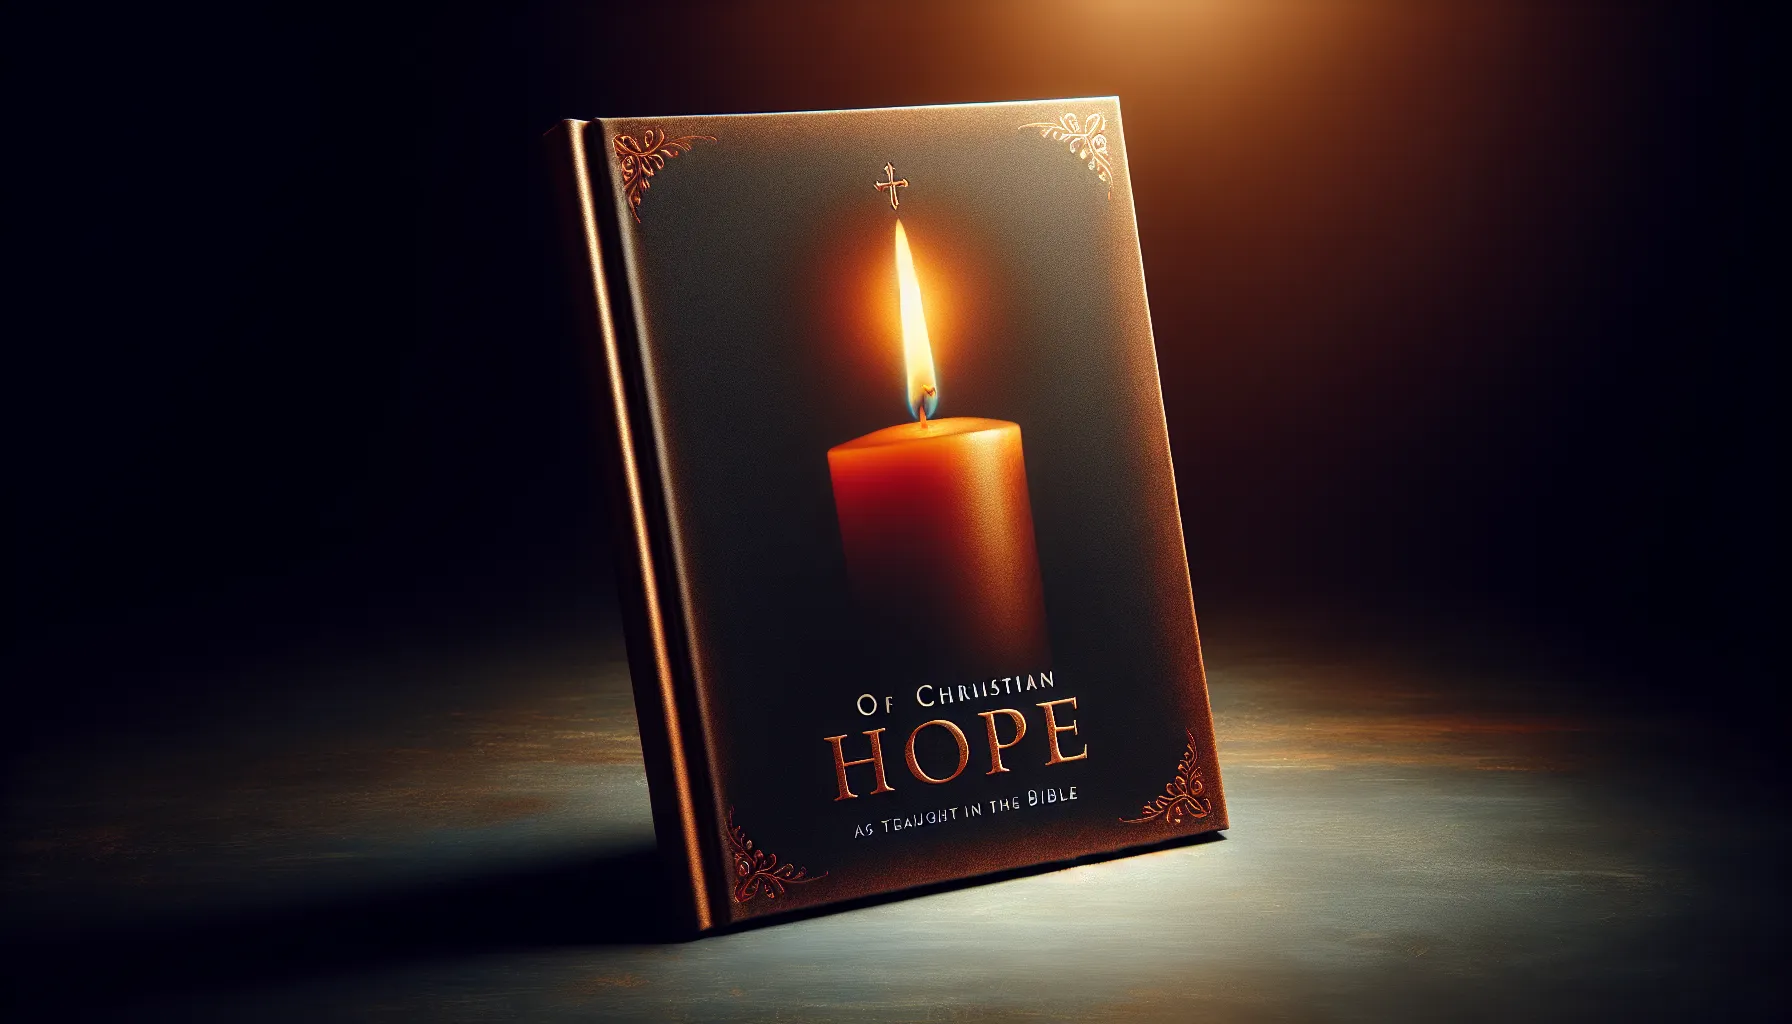 Imagen de portada: Una vela encendida sobre un fondo oscuro